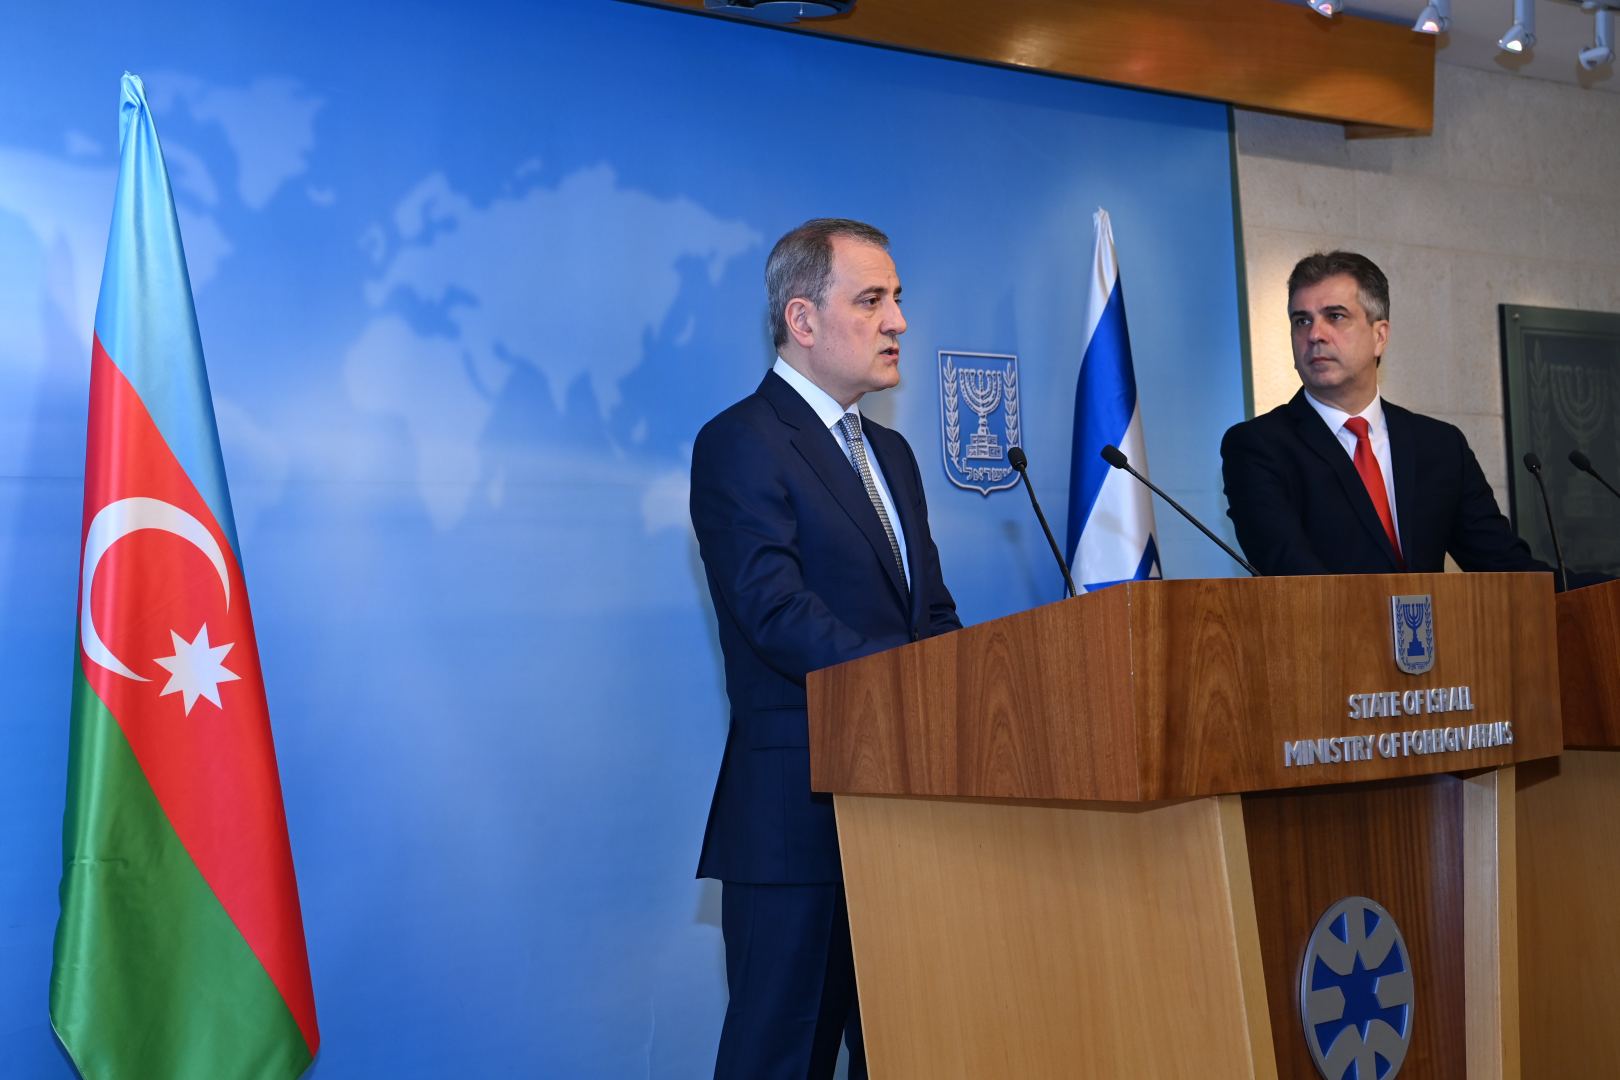 Meeting of FMs of Azerbaijan, Israel kicks off (PHOTO)